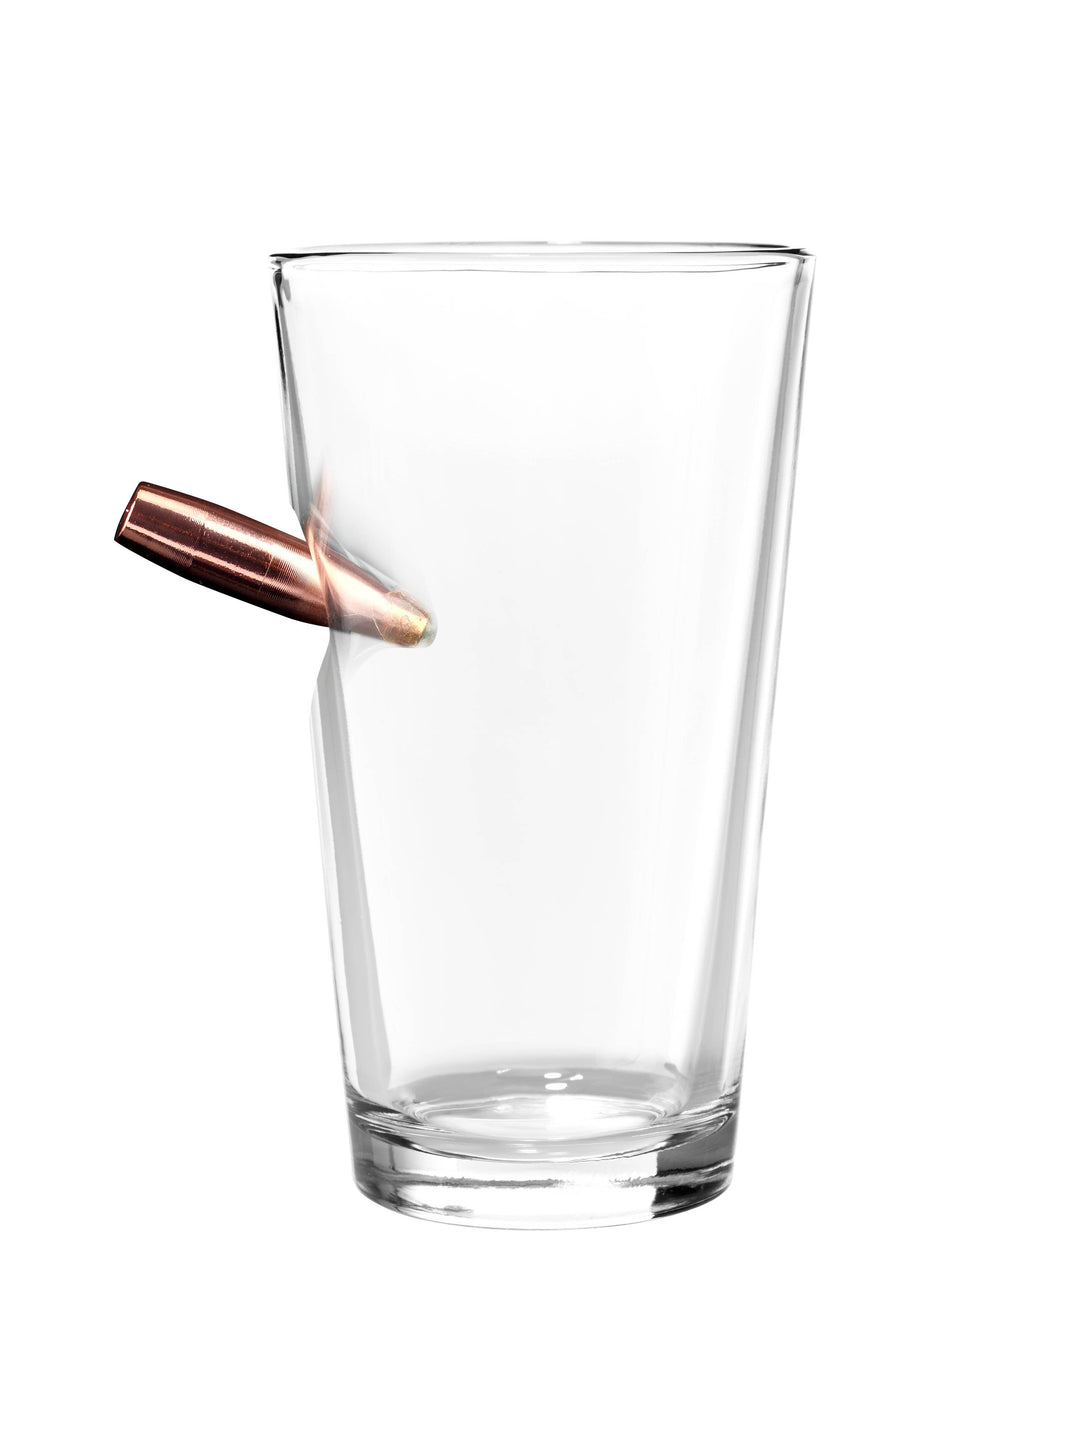 CALIBER GOURMET / CAMPCO - Last Man Standing - Bullet Pint Glass